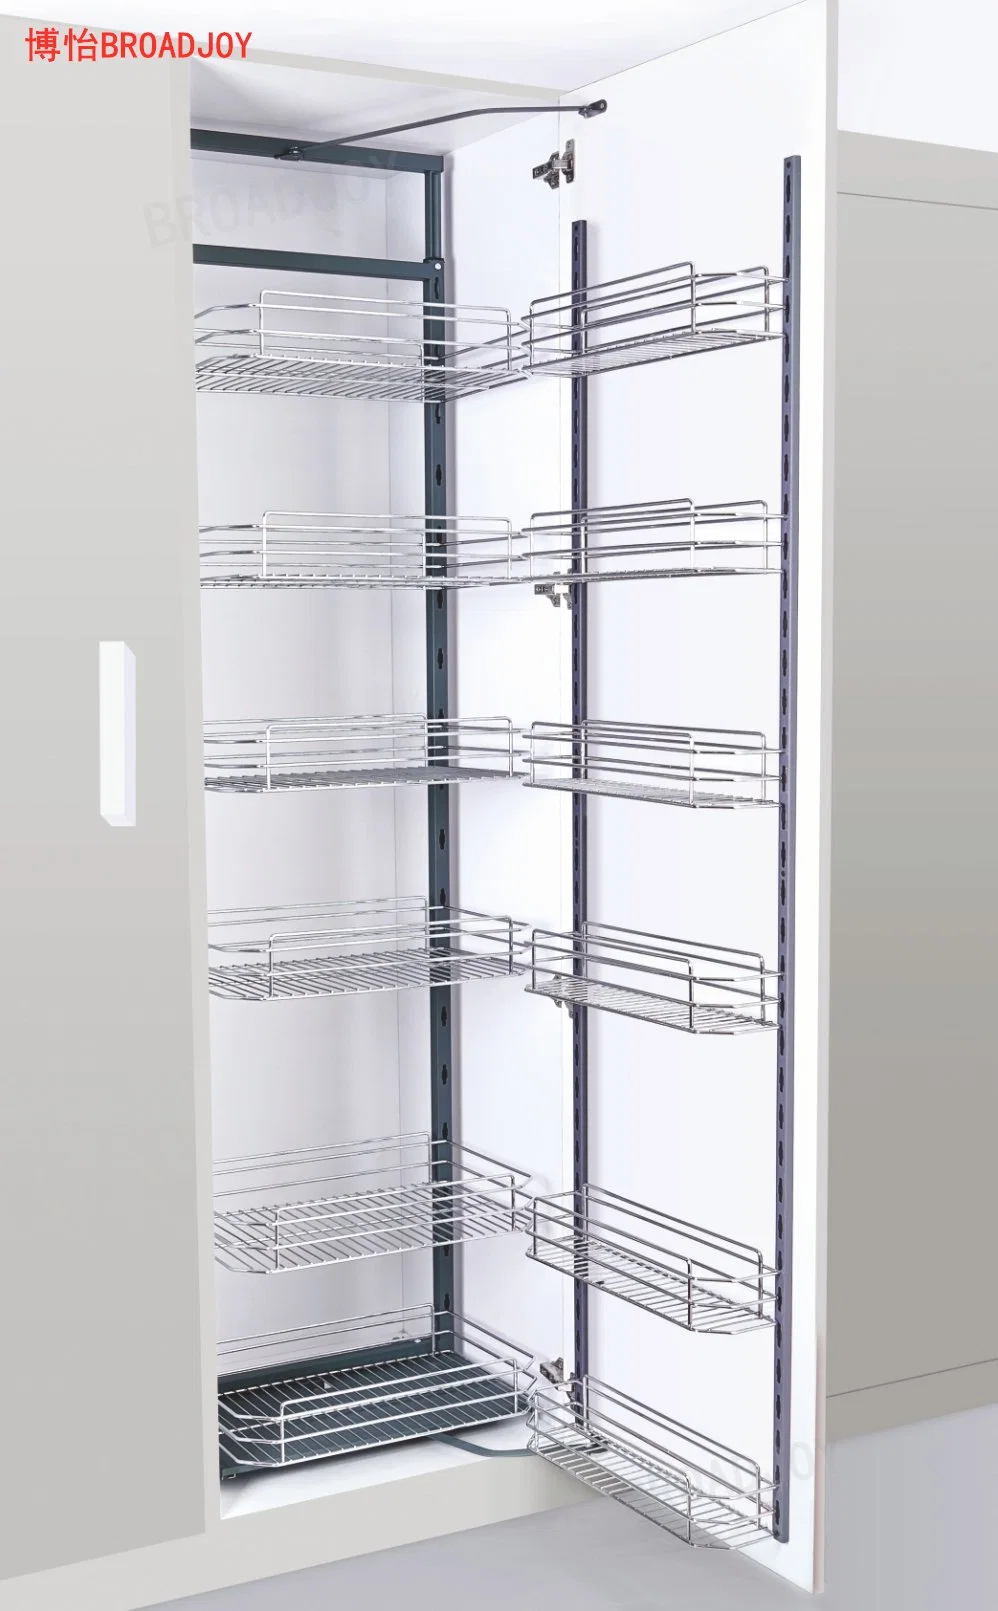 Reasonable Price Furniture Hardware Soft Closing Kitchen Cabinet Super Storage Organizer Wire Rack Shelf Holder Basket Tall Unit Pantry Accessories